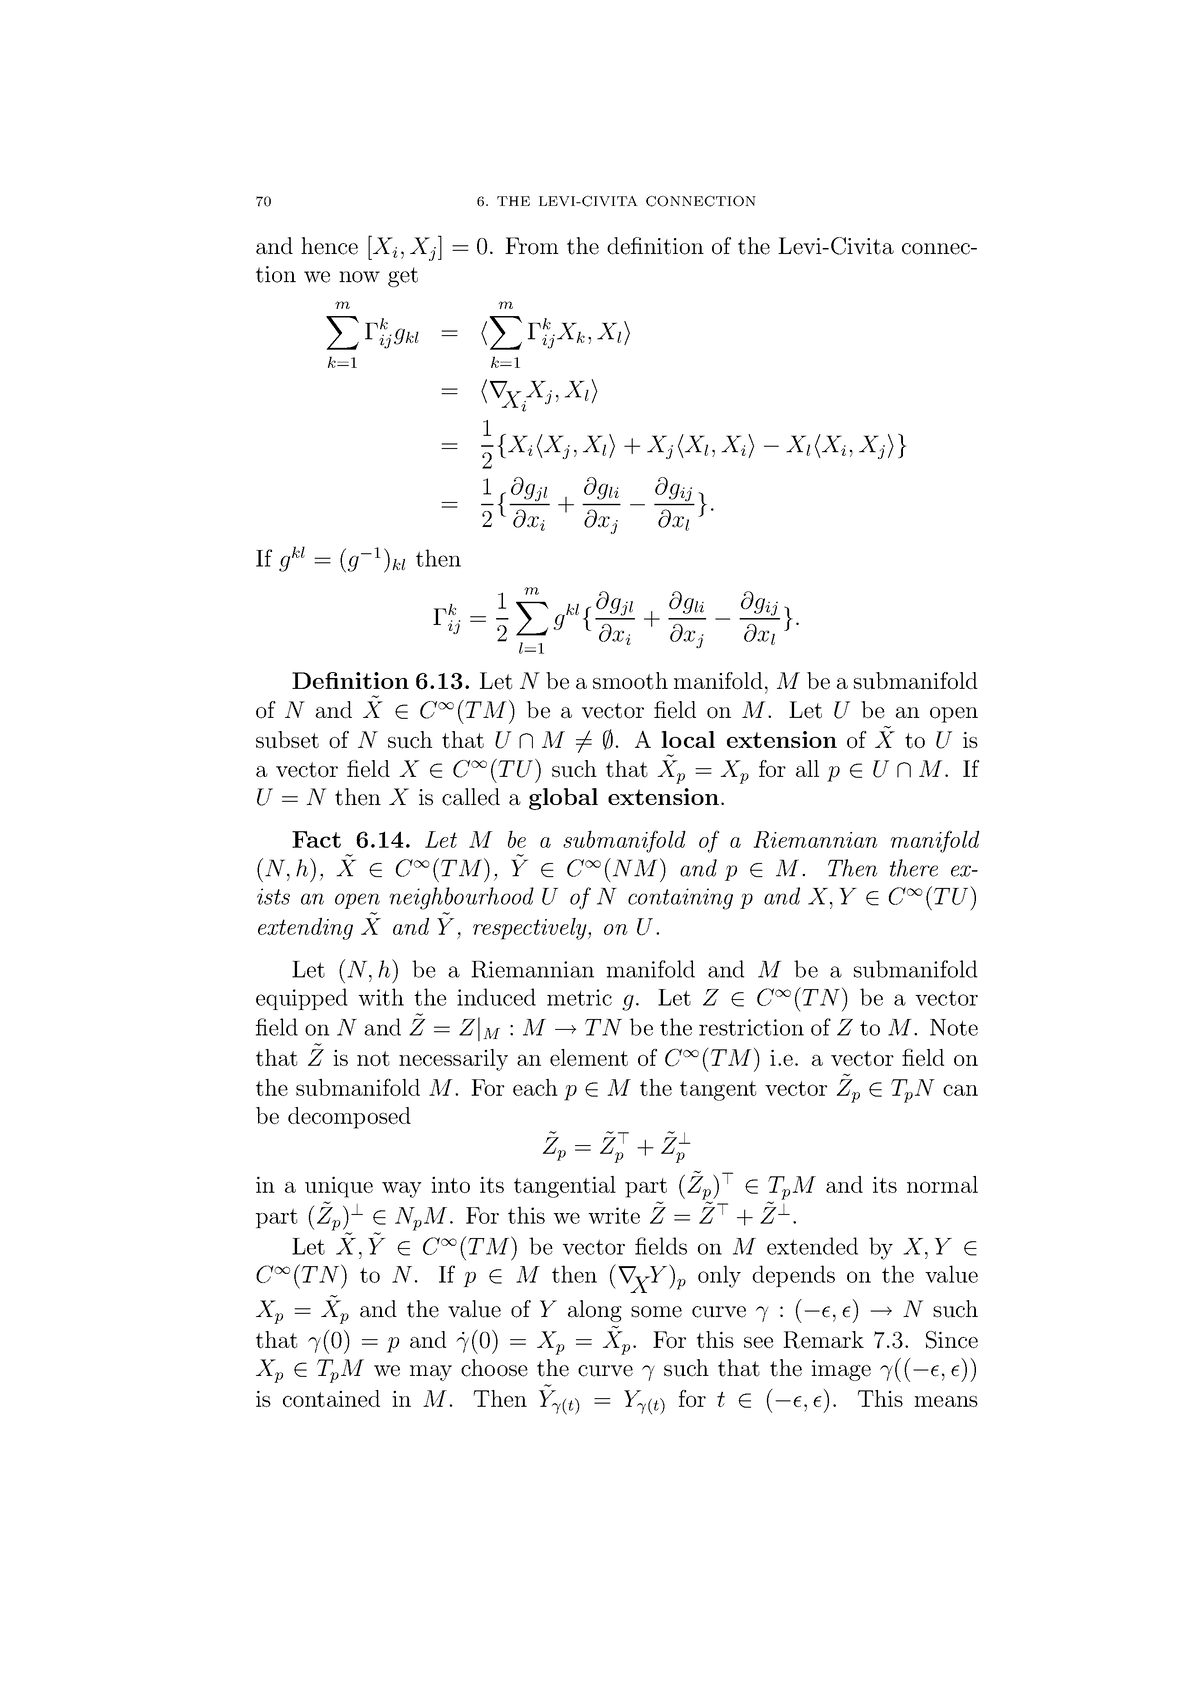 An Introduction to Riemannian Geometry-13 - and hence [Xi, Xj ] = 0 ...